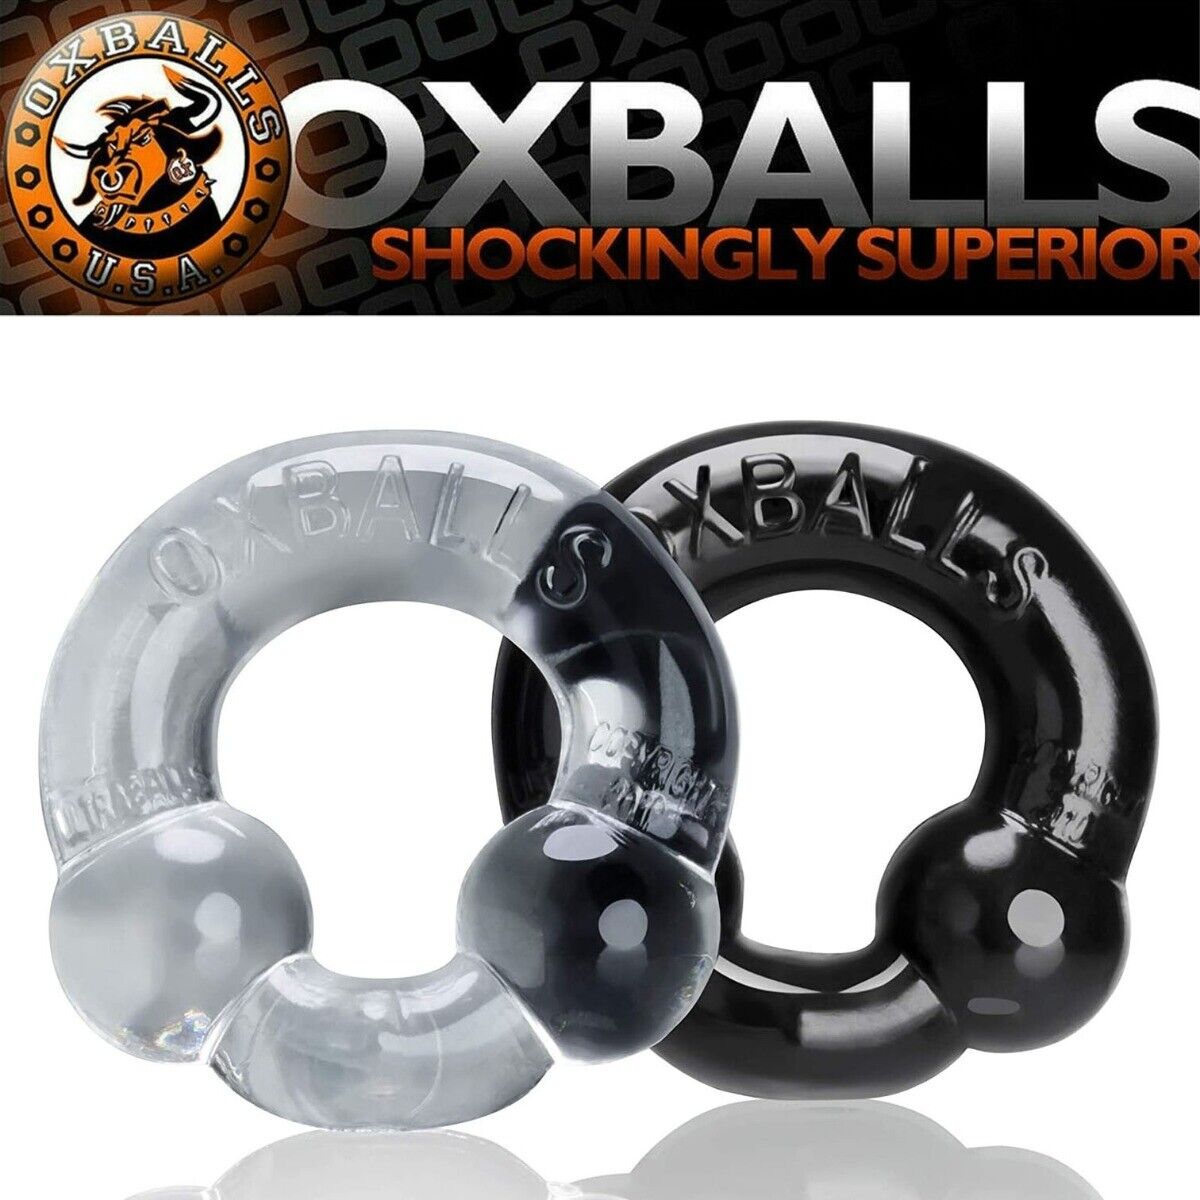 Oxballs Ultra Balls Cock Ring Penis Erection Enhancer Prolong Delay Sex Toy